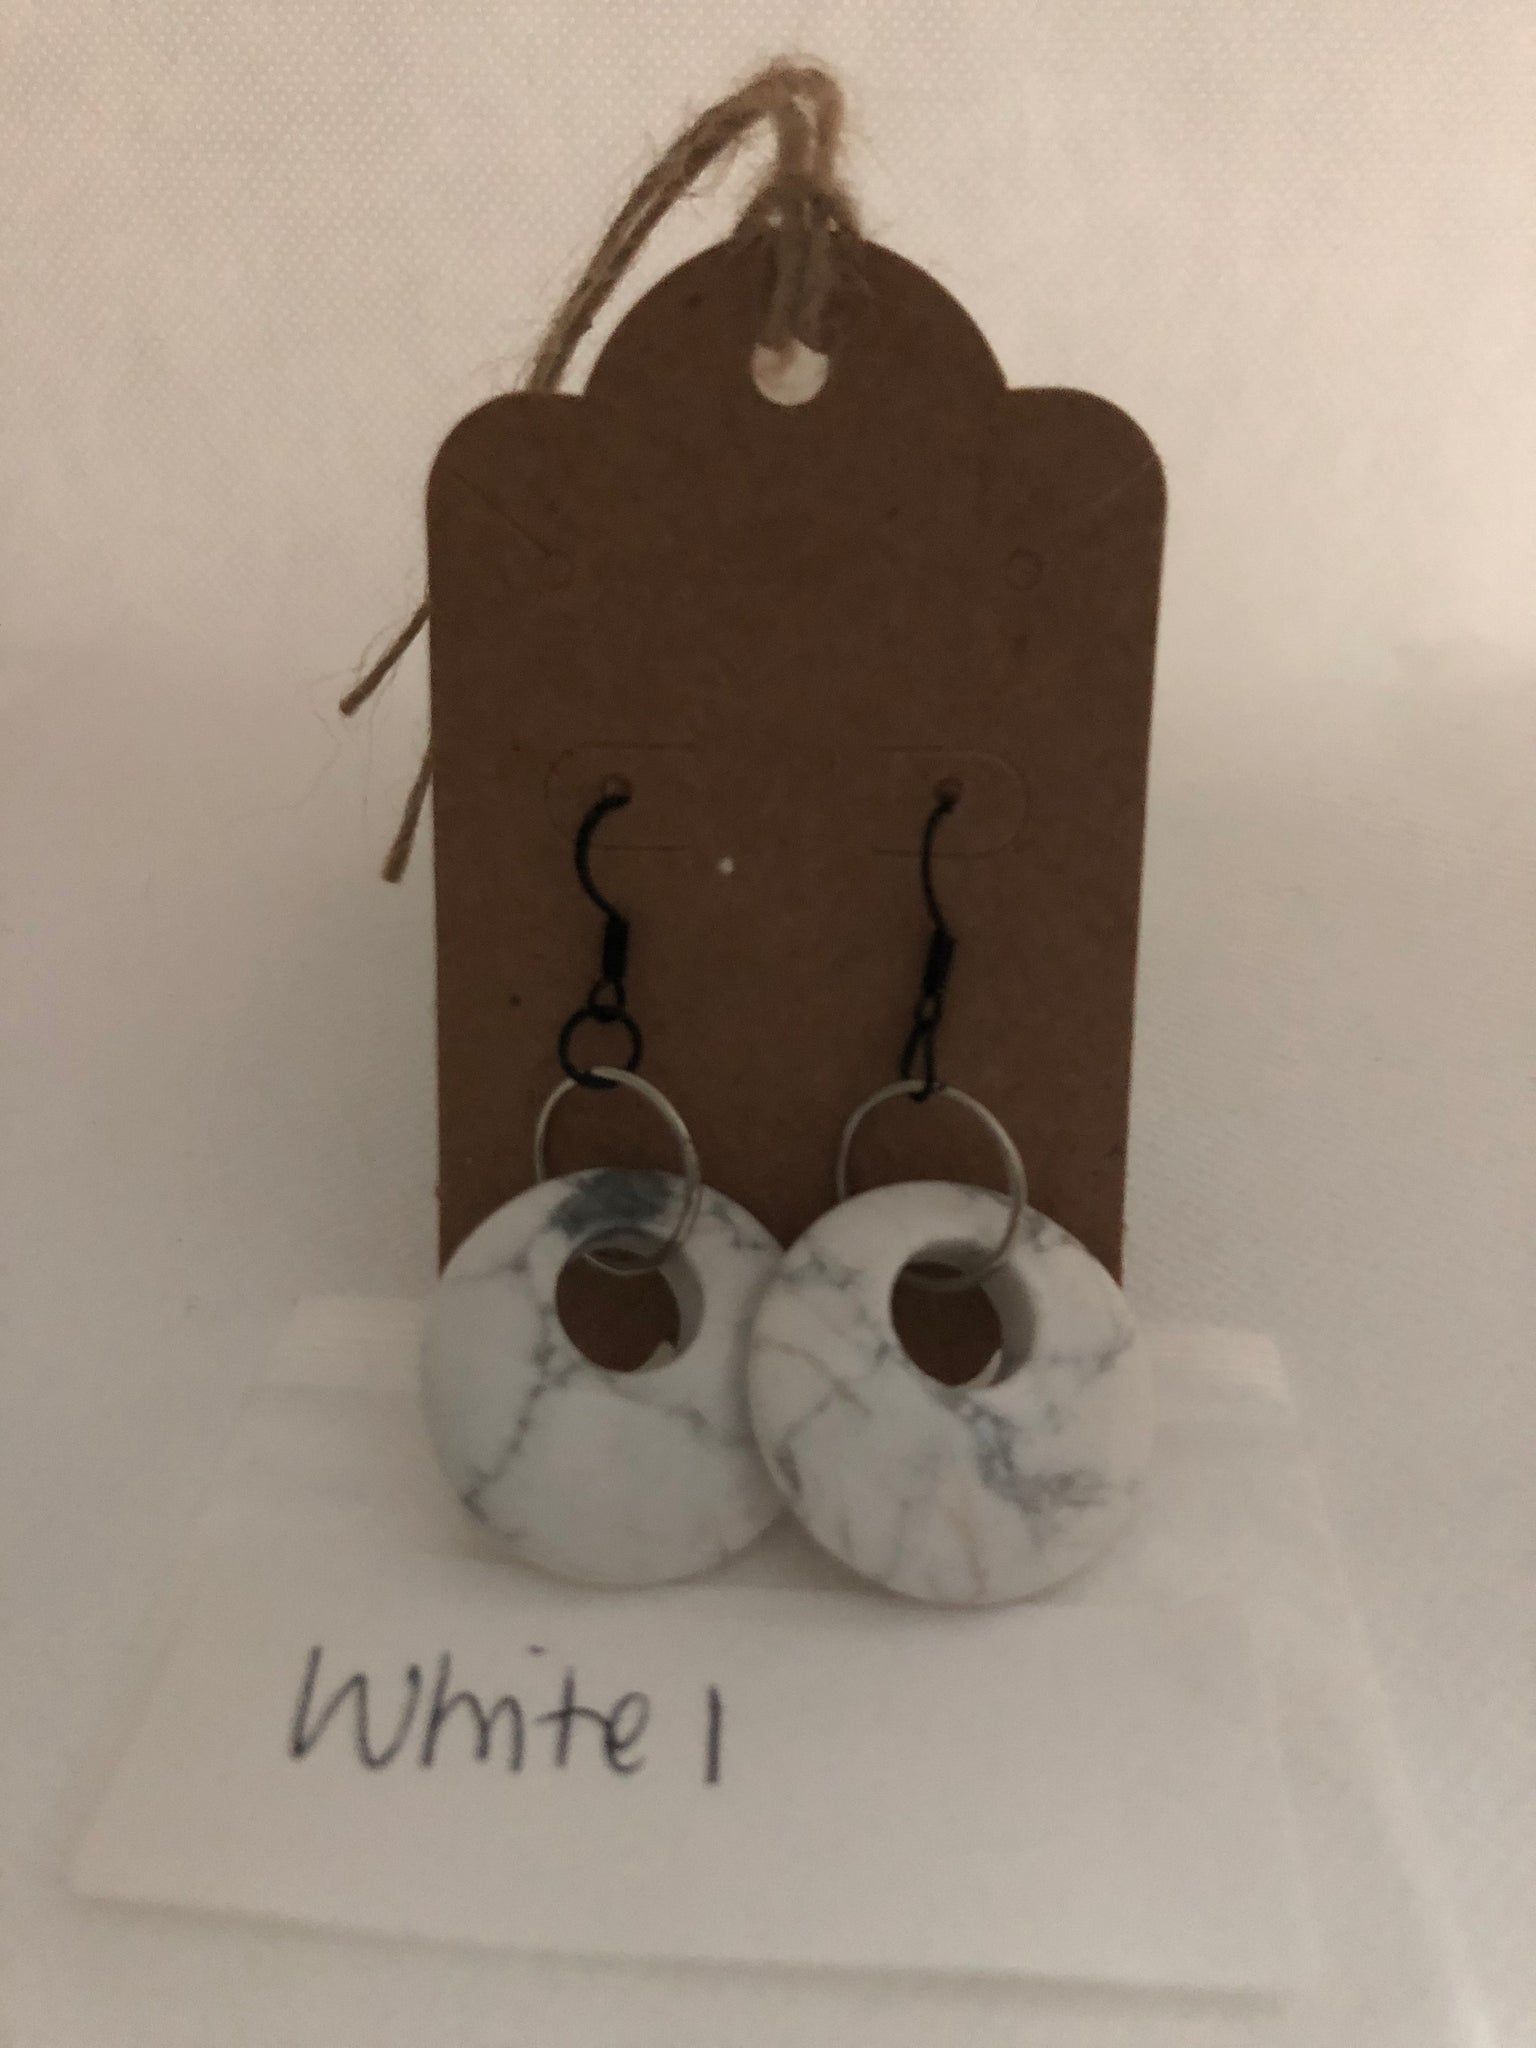 Snowball Earrings